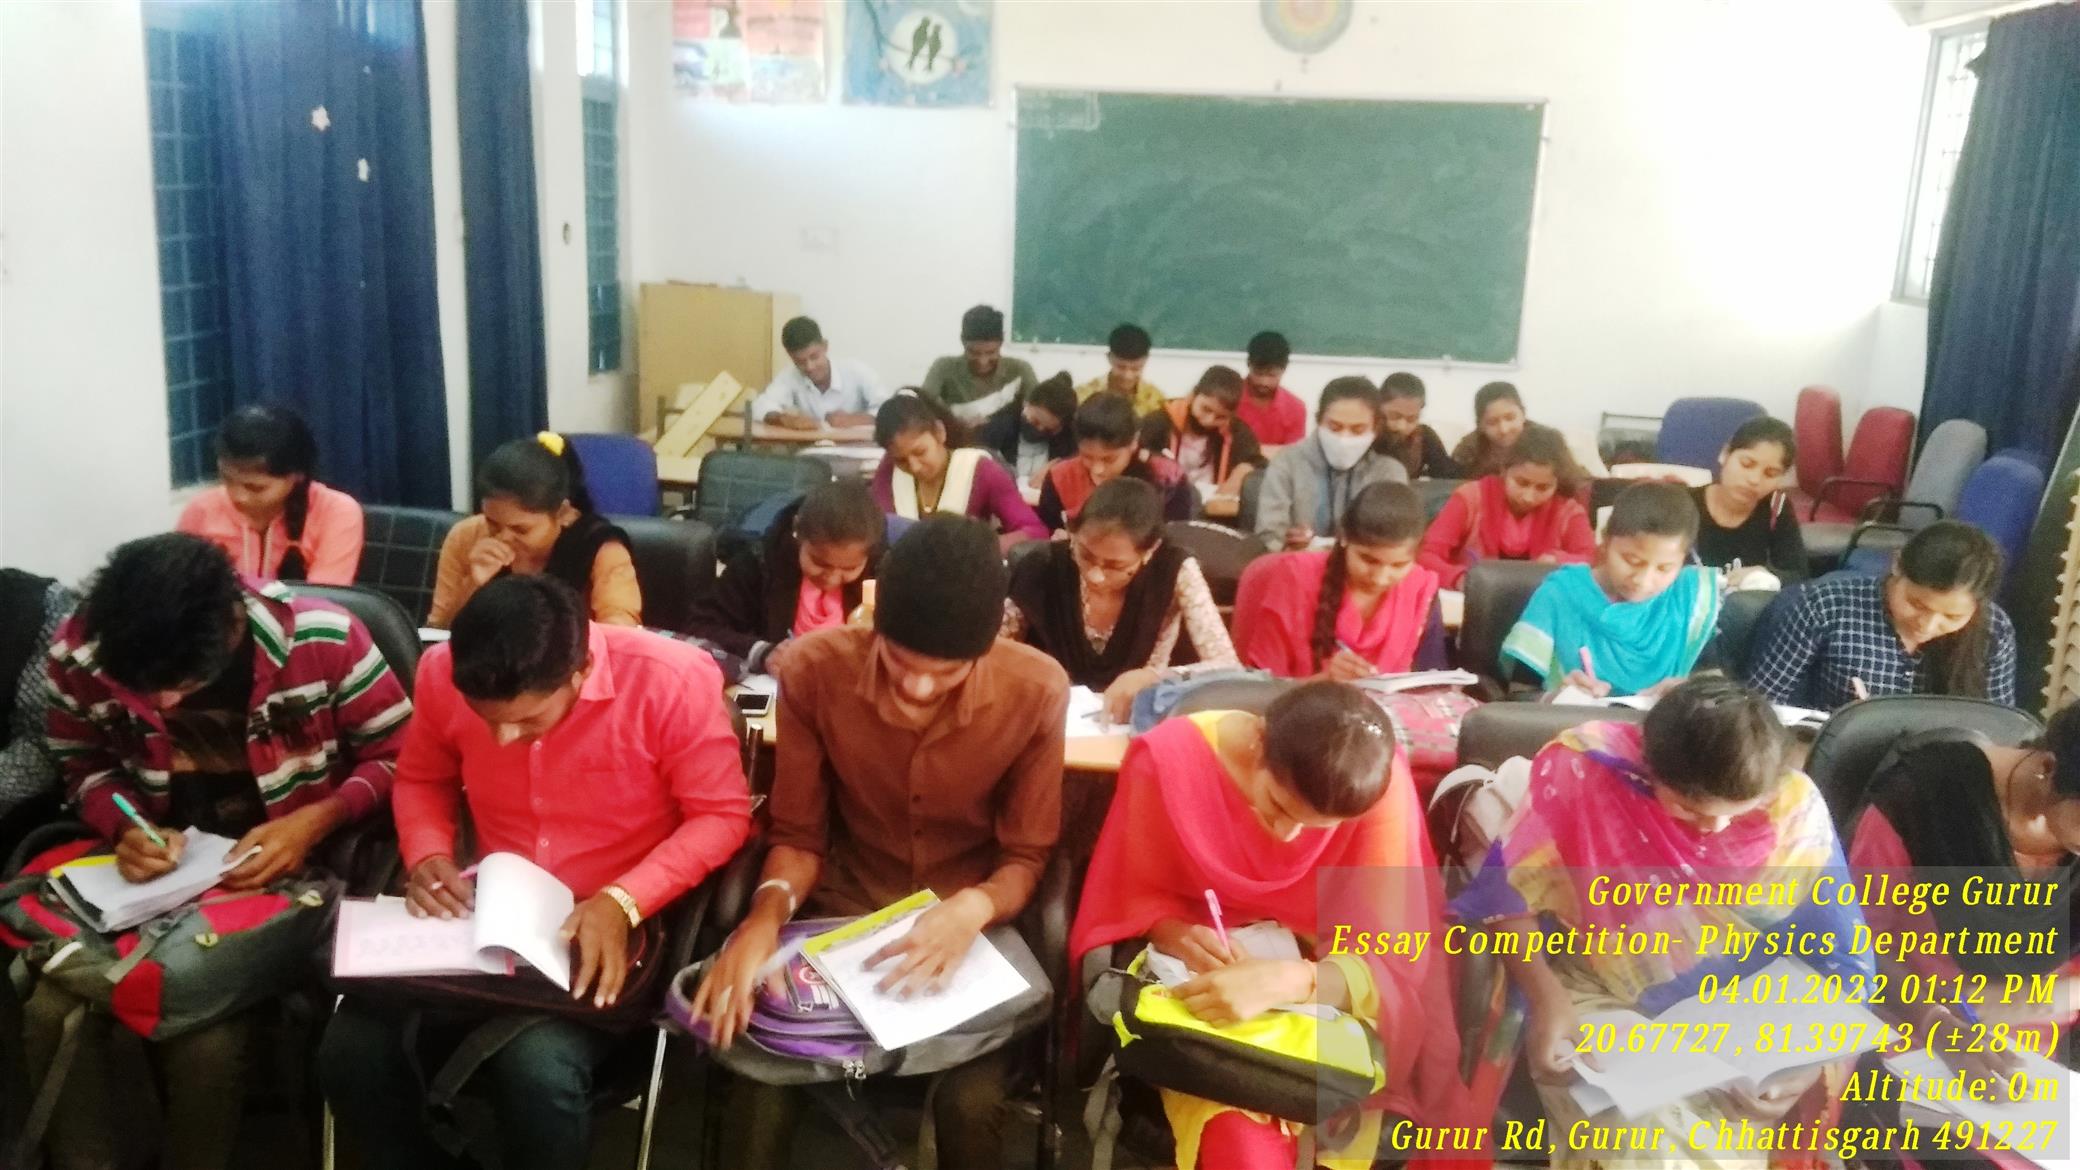 Physics Department - Essay Writing Competition - Photo Govt. college Gurur